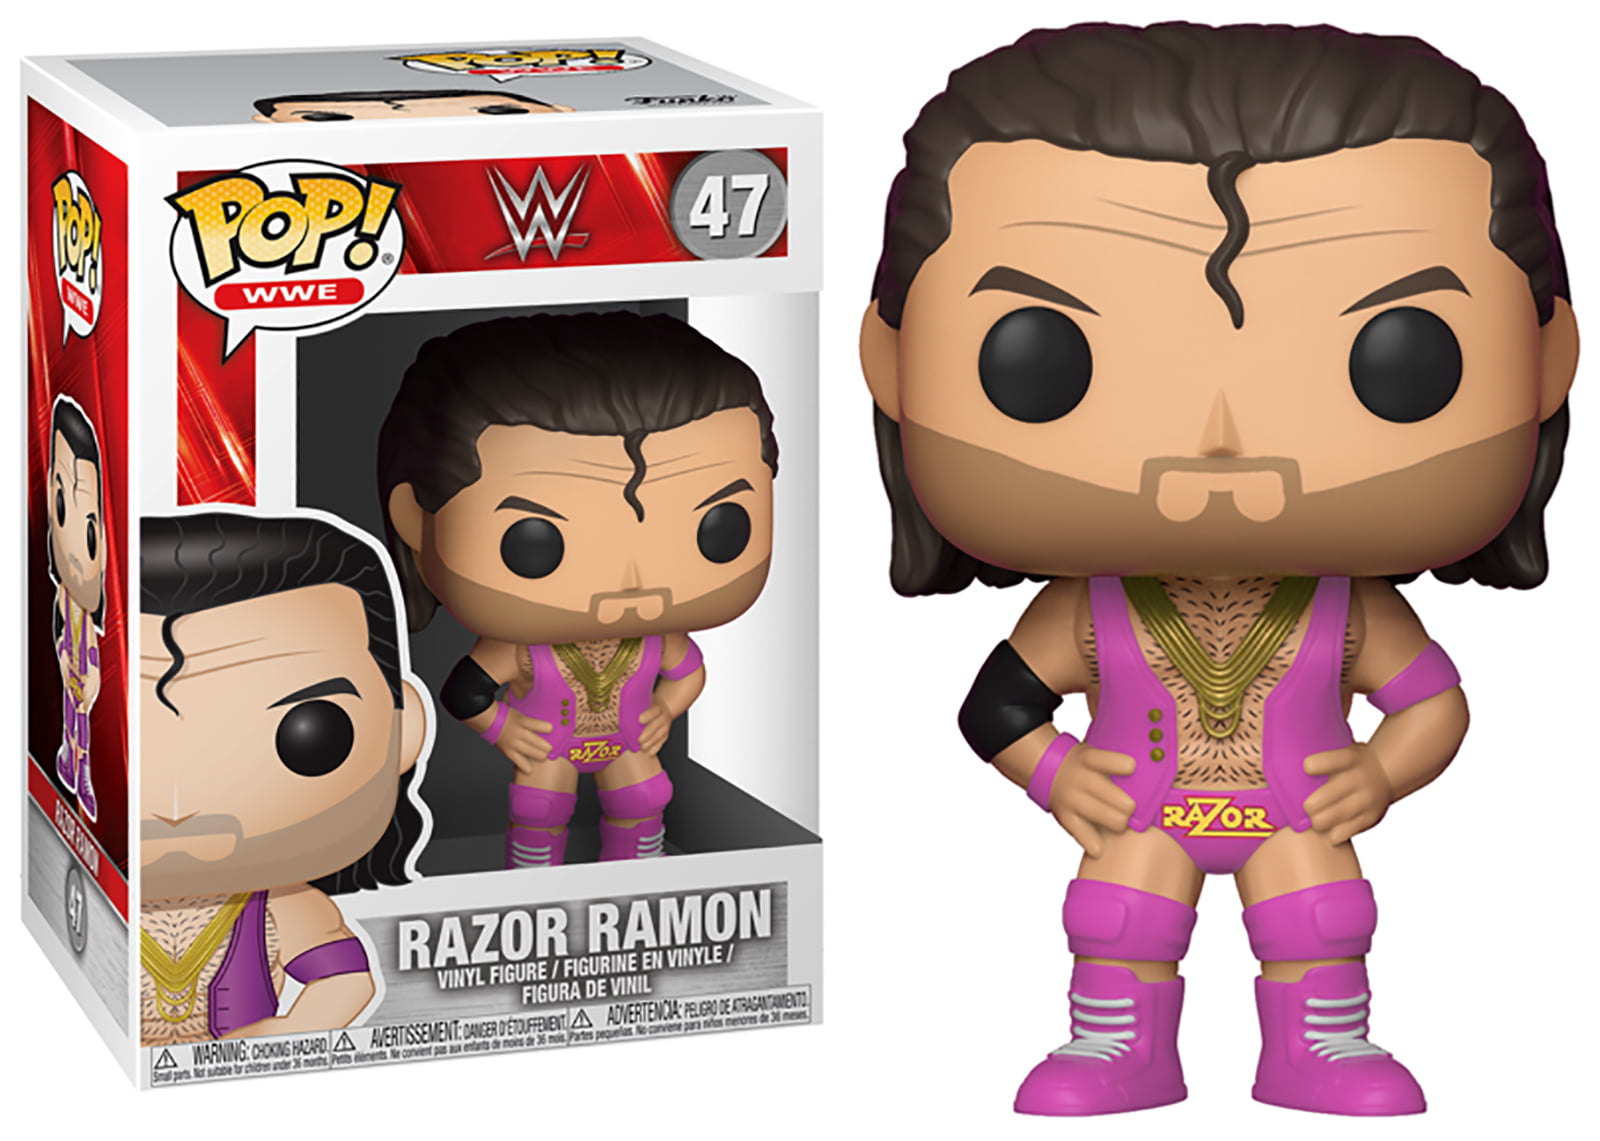 Wrestler NEW Funko Razor Ramon Pop Vinyl Figure WWE 